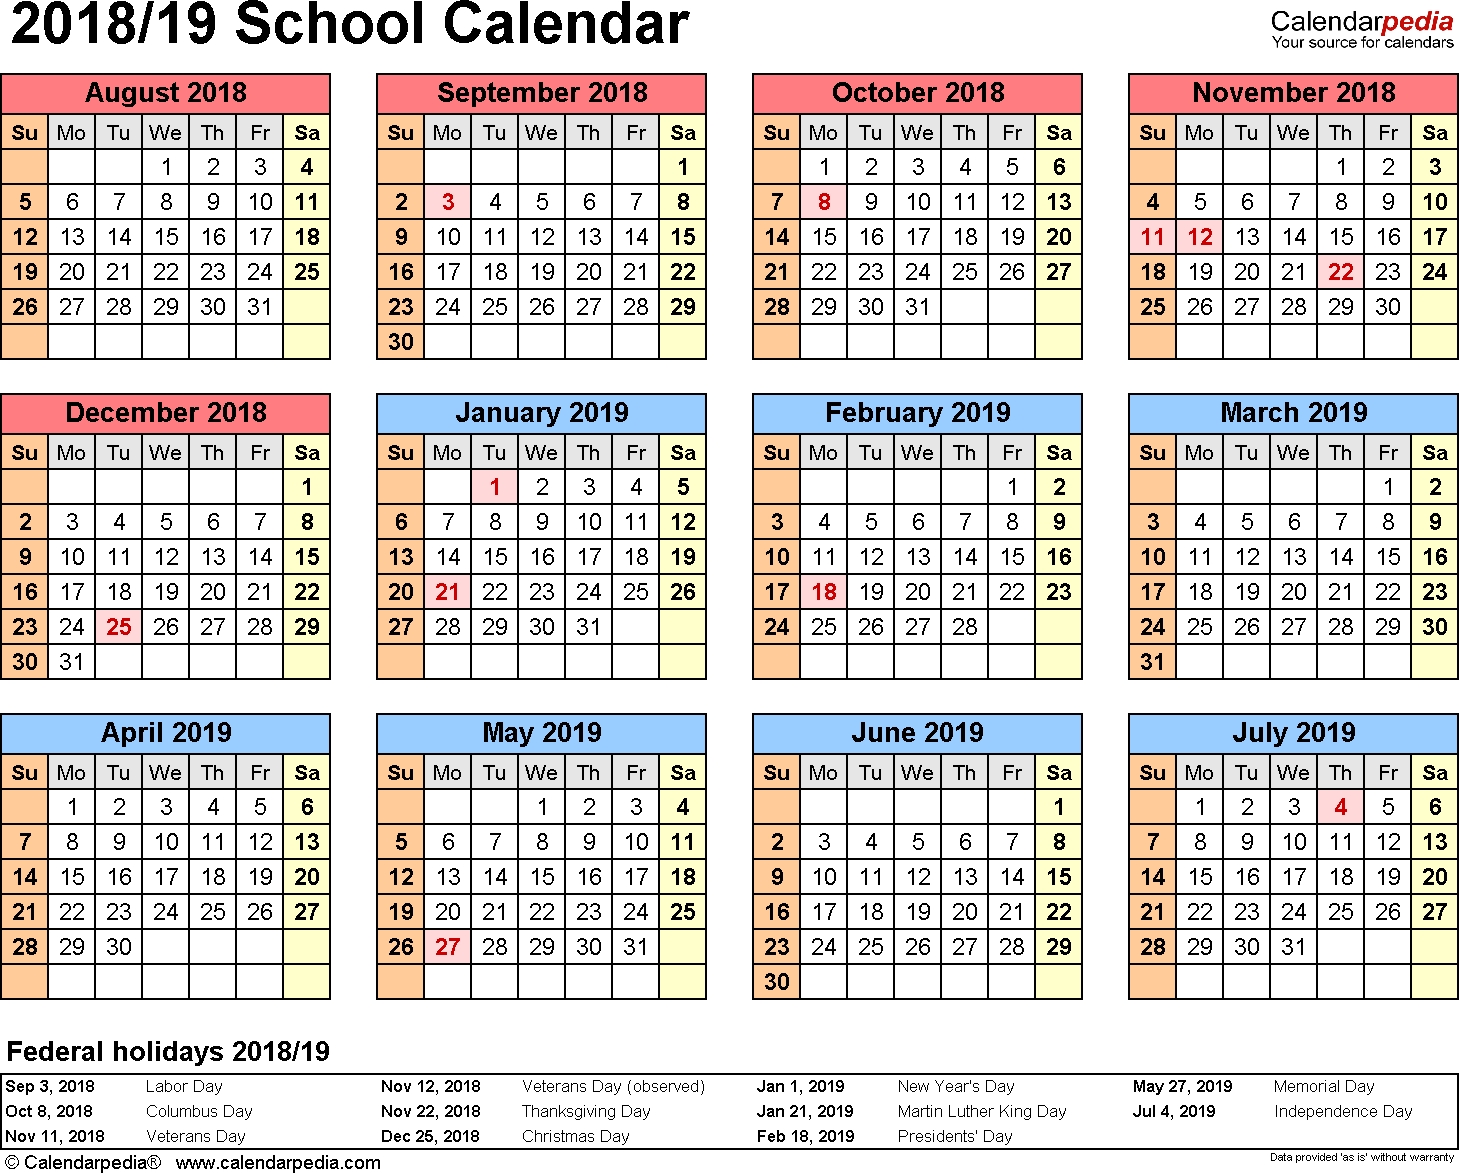 School Calendars 2018/2019 - Free Printable Word Templates School Calendar With Legal Holidays